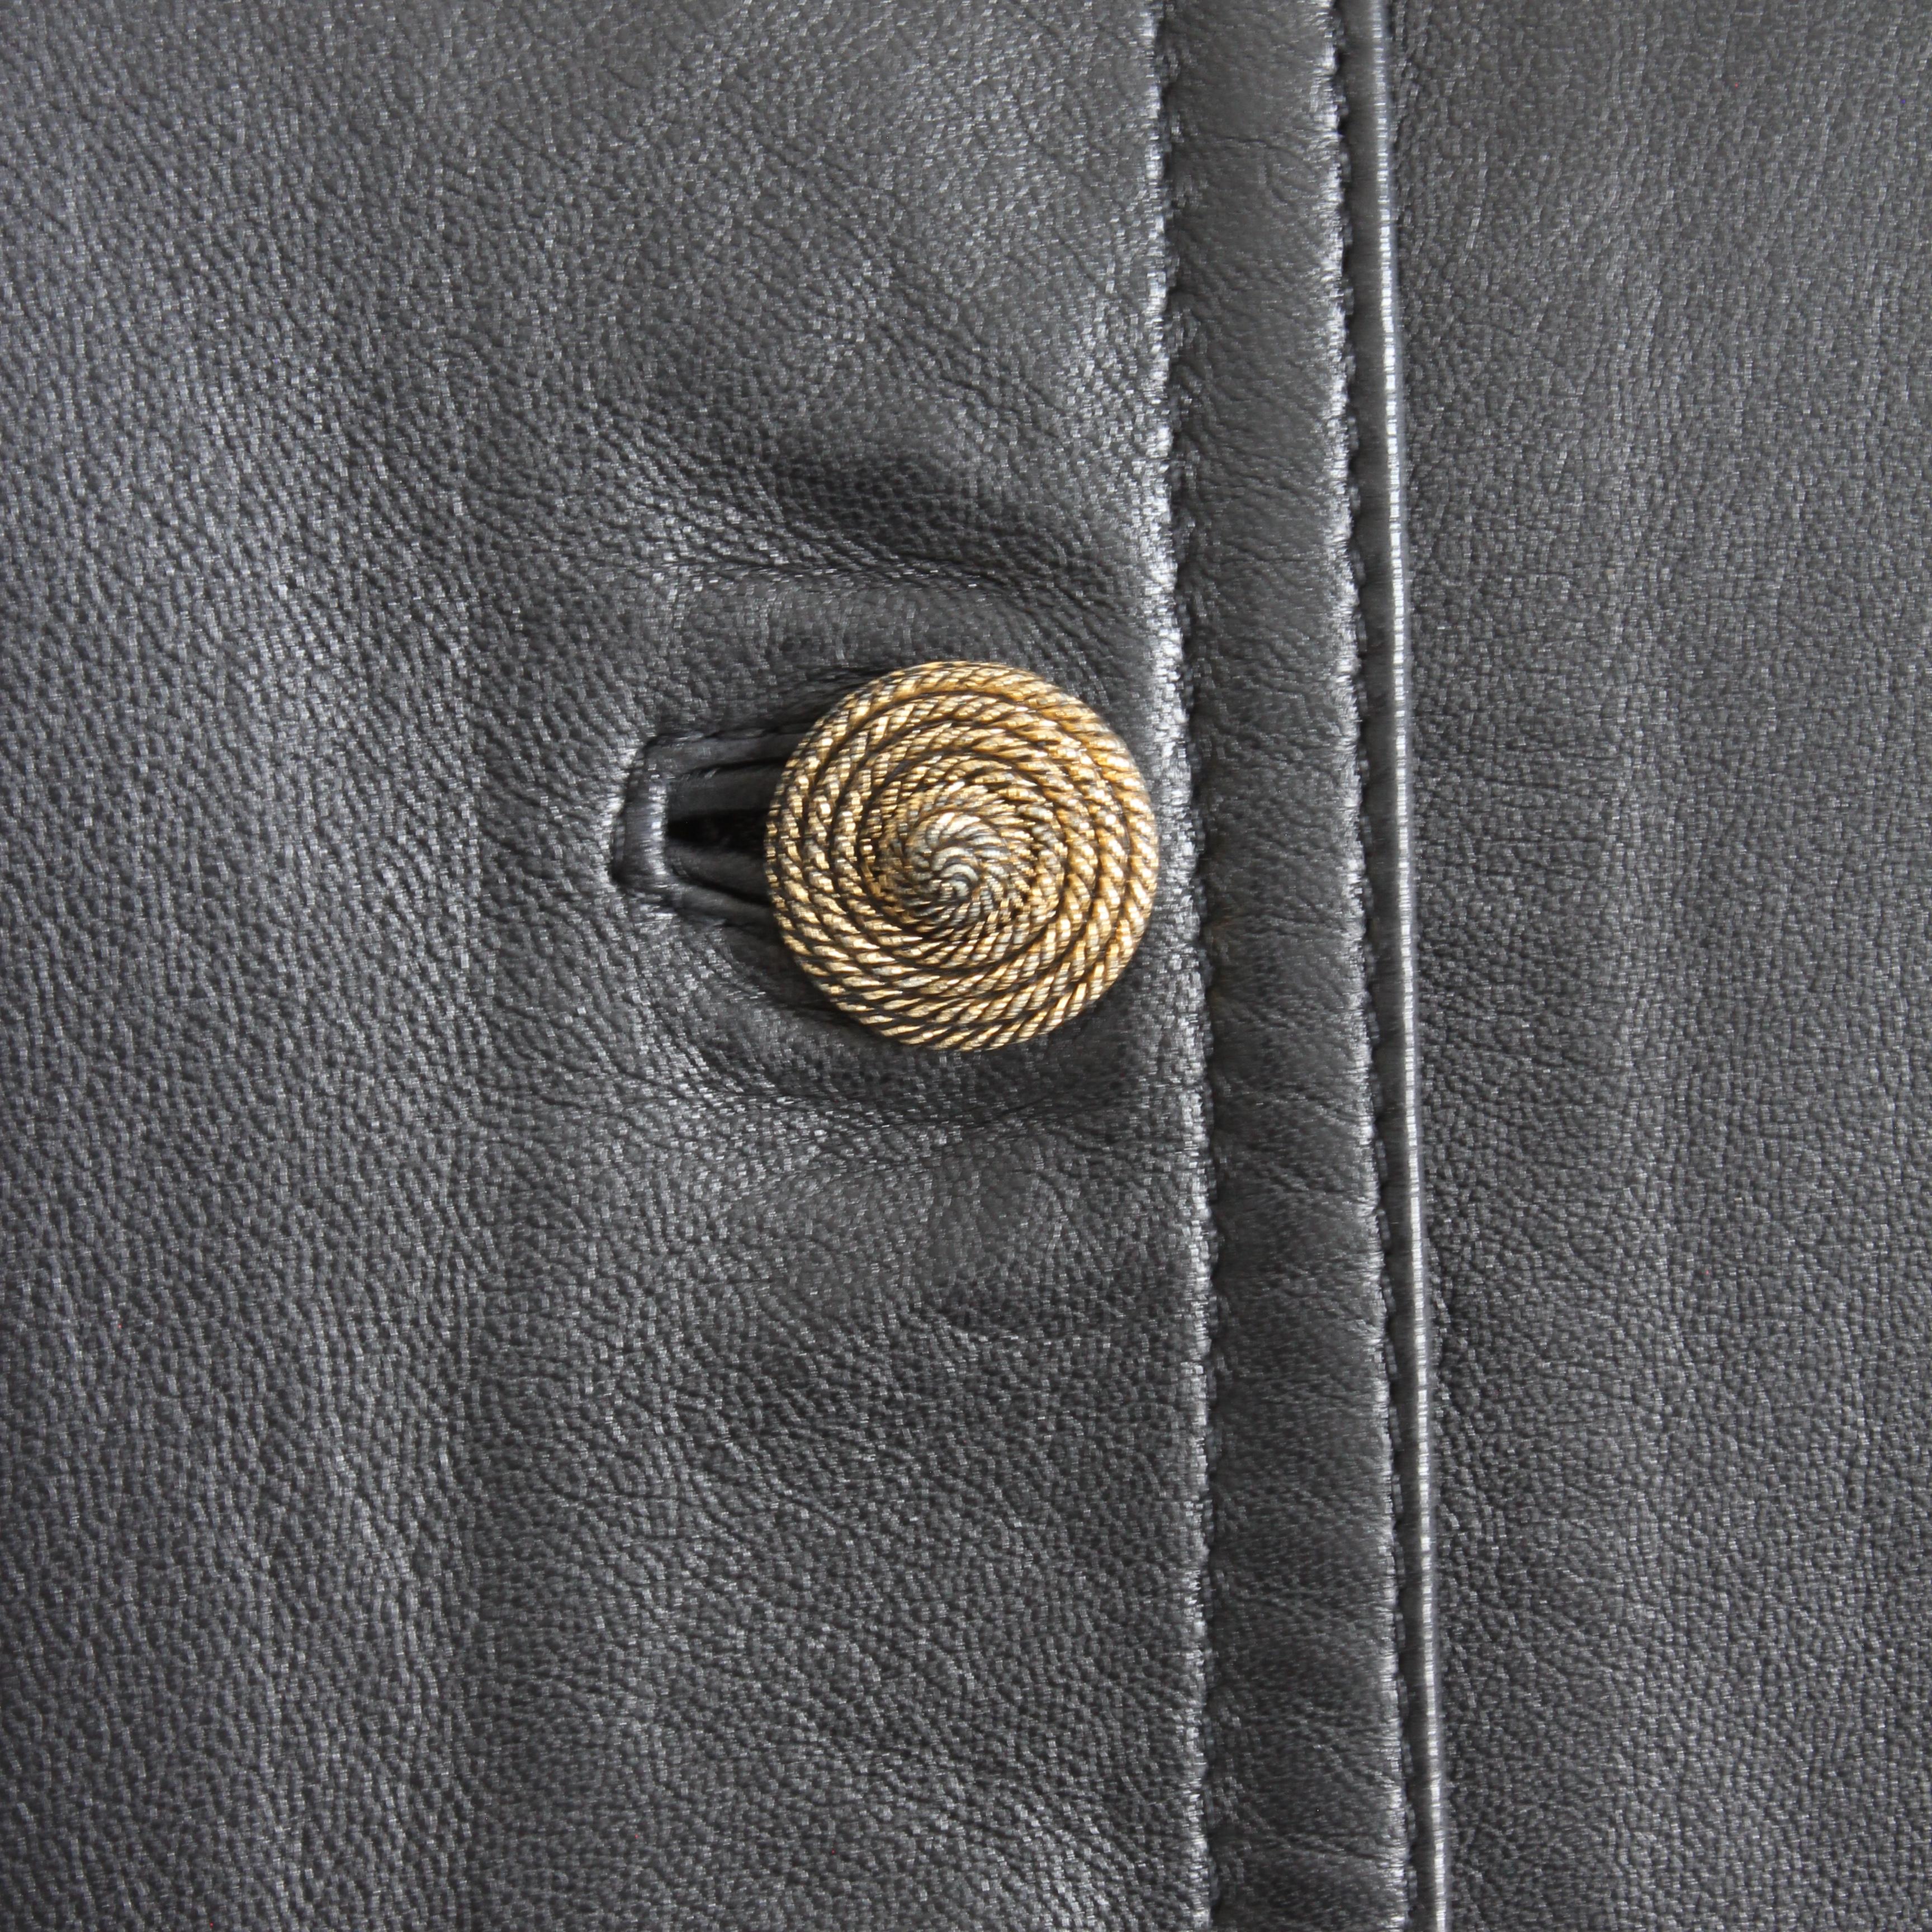 Maus & Hoffman Black Leather Jacket Ladies with Jewel Neckline England Sz 8 For Sale 1